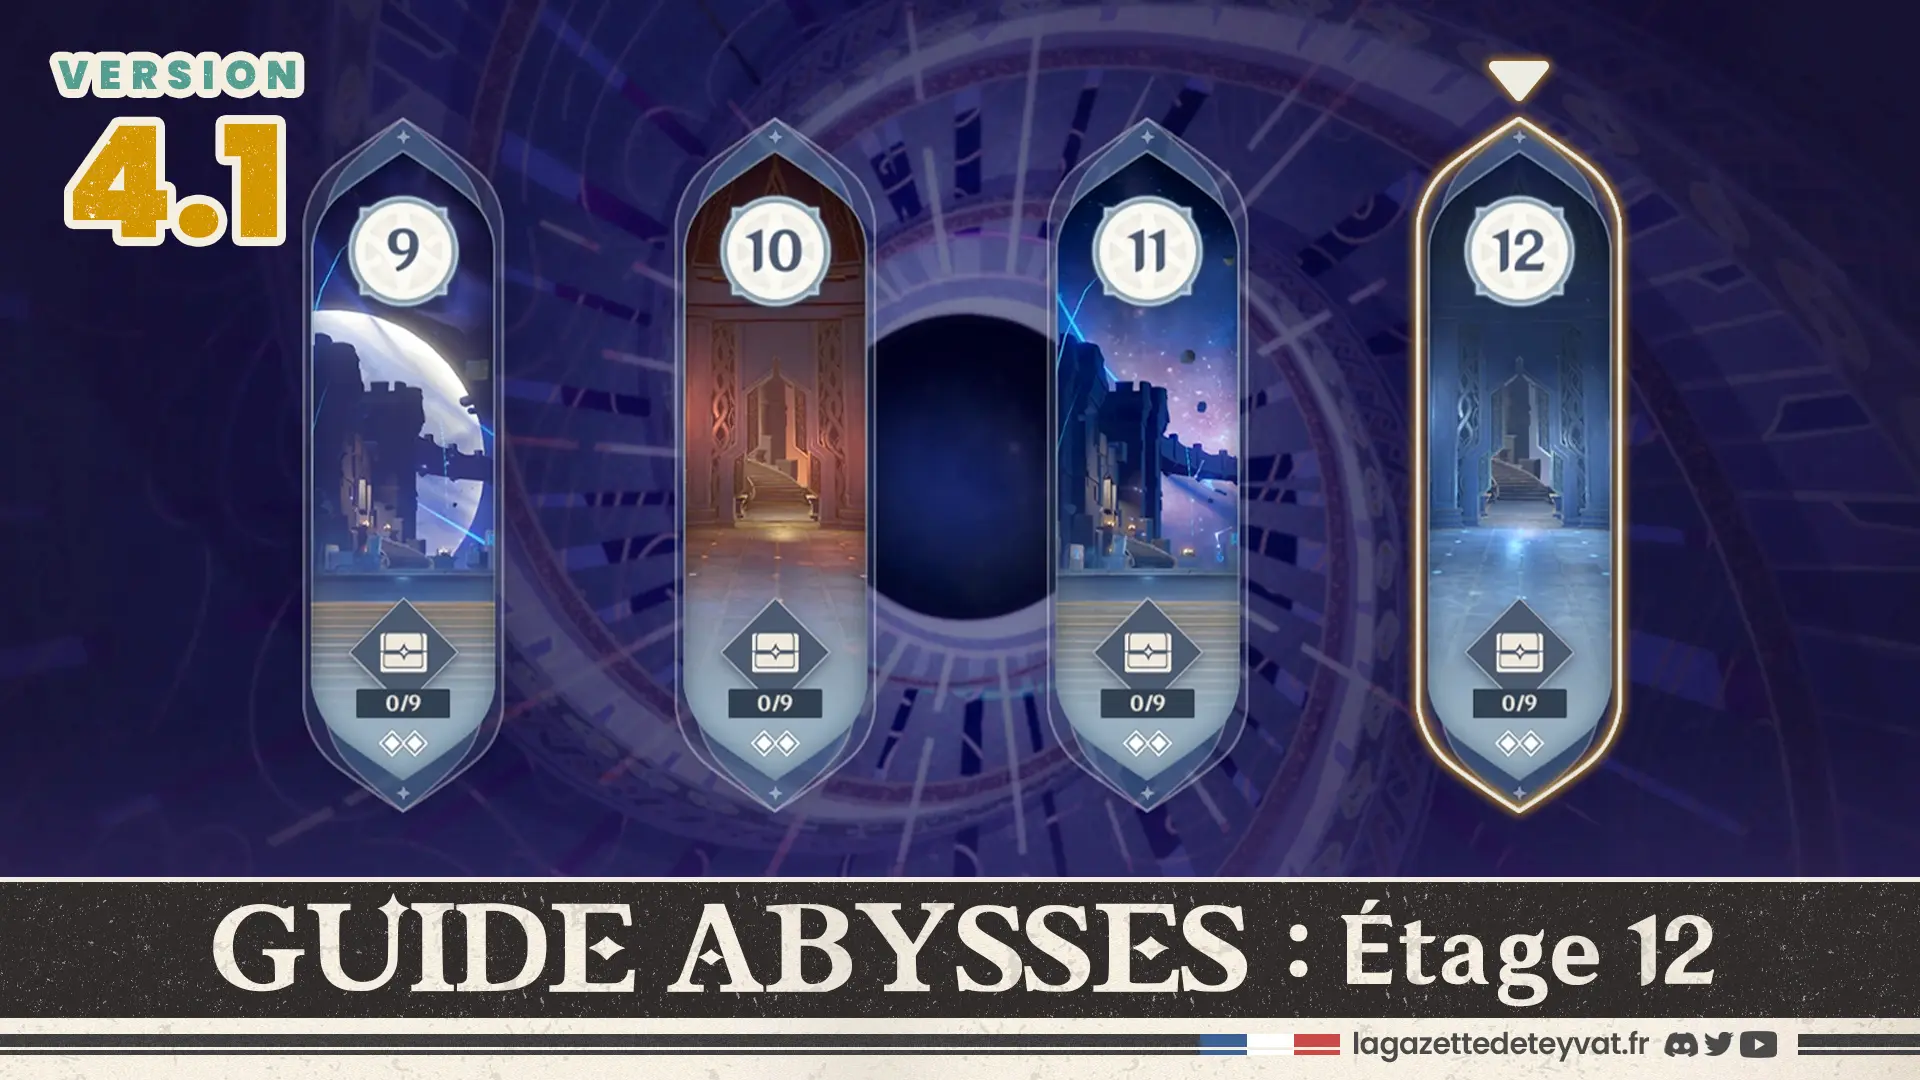 Abysses 4.1 étage 12